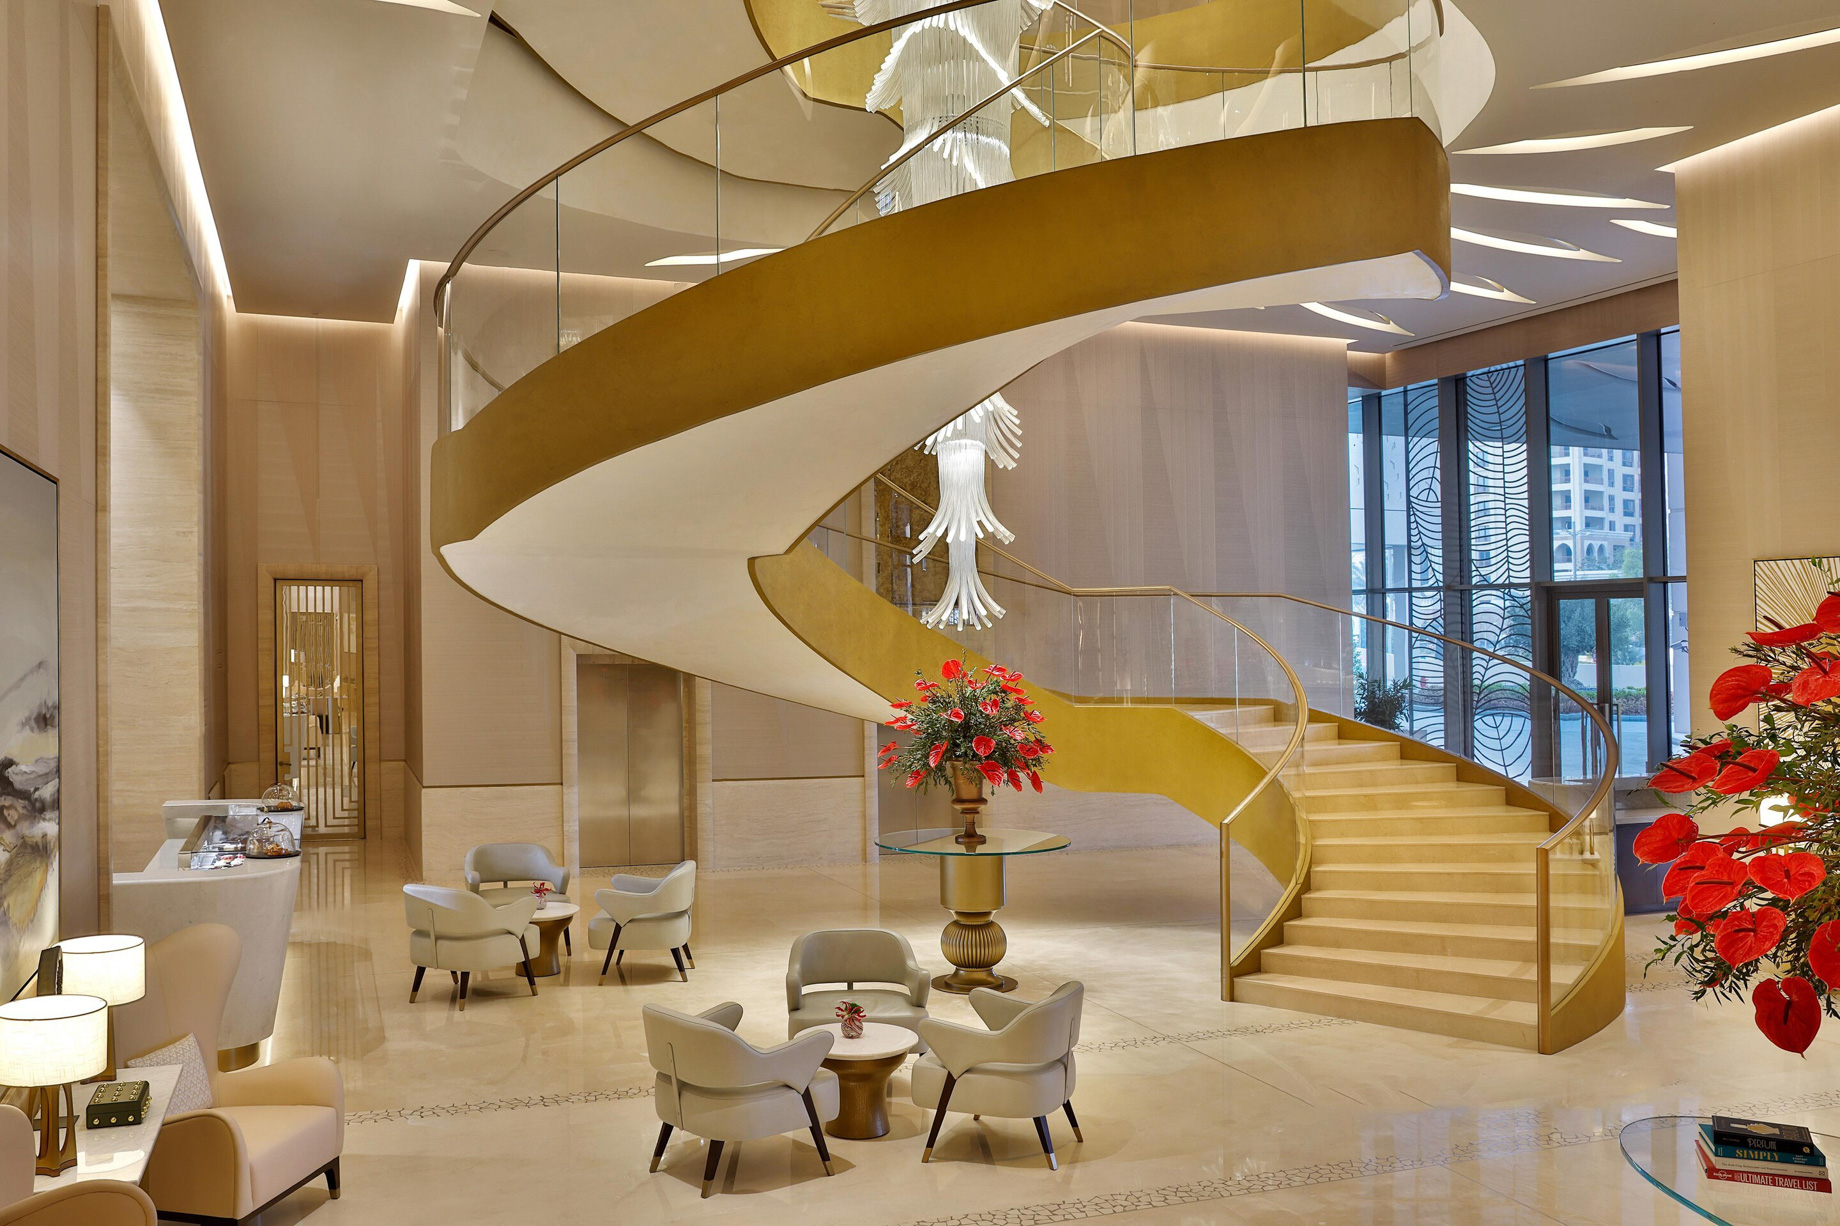 The St. Regis Dubai The Palm Jumeirah Hotel – Dubai, UAE – Lobby Grand Staircase and Chandelier